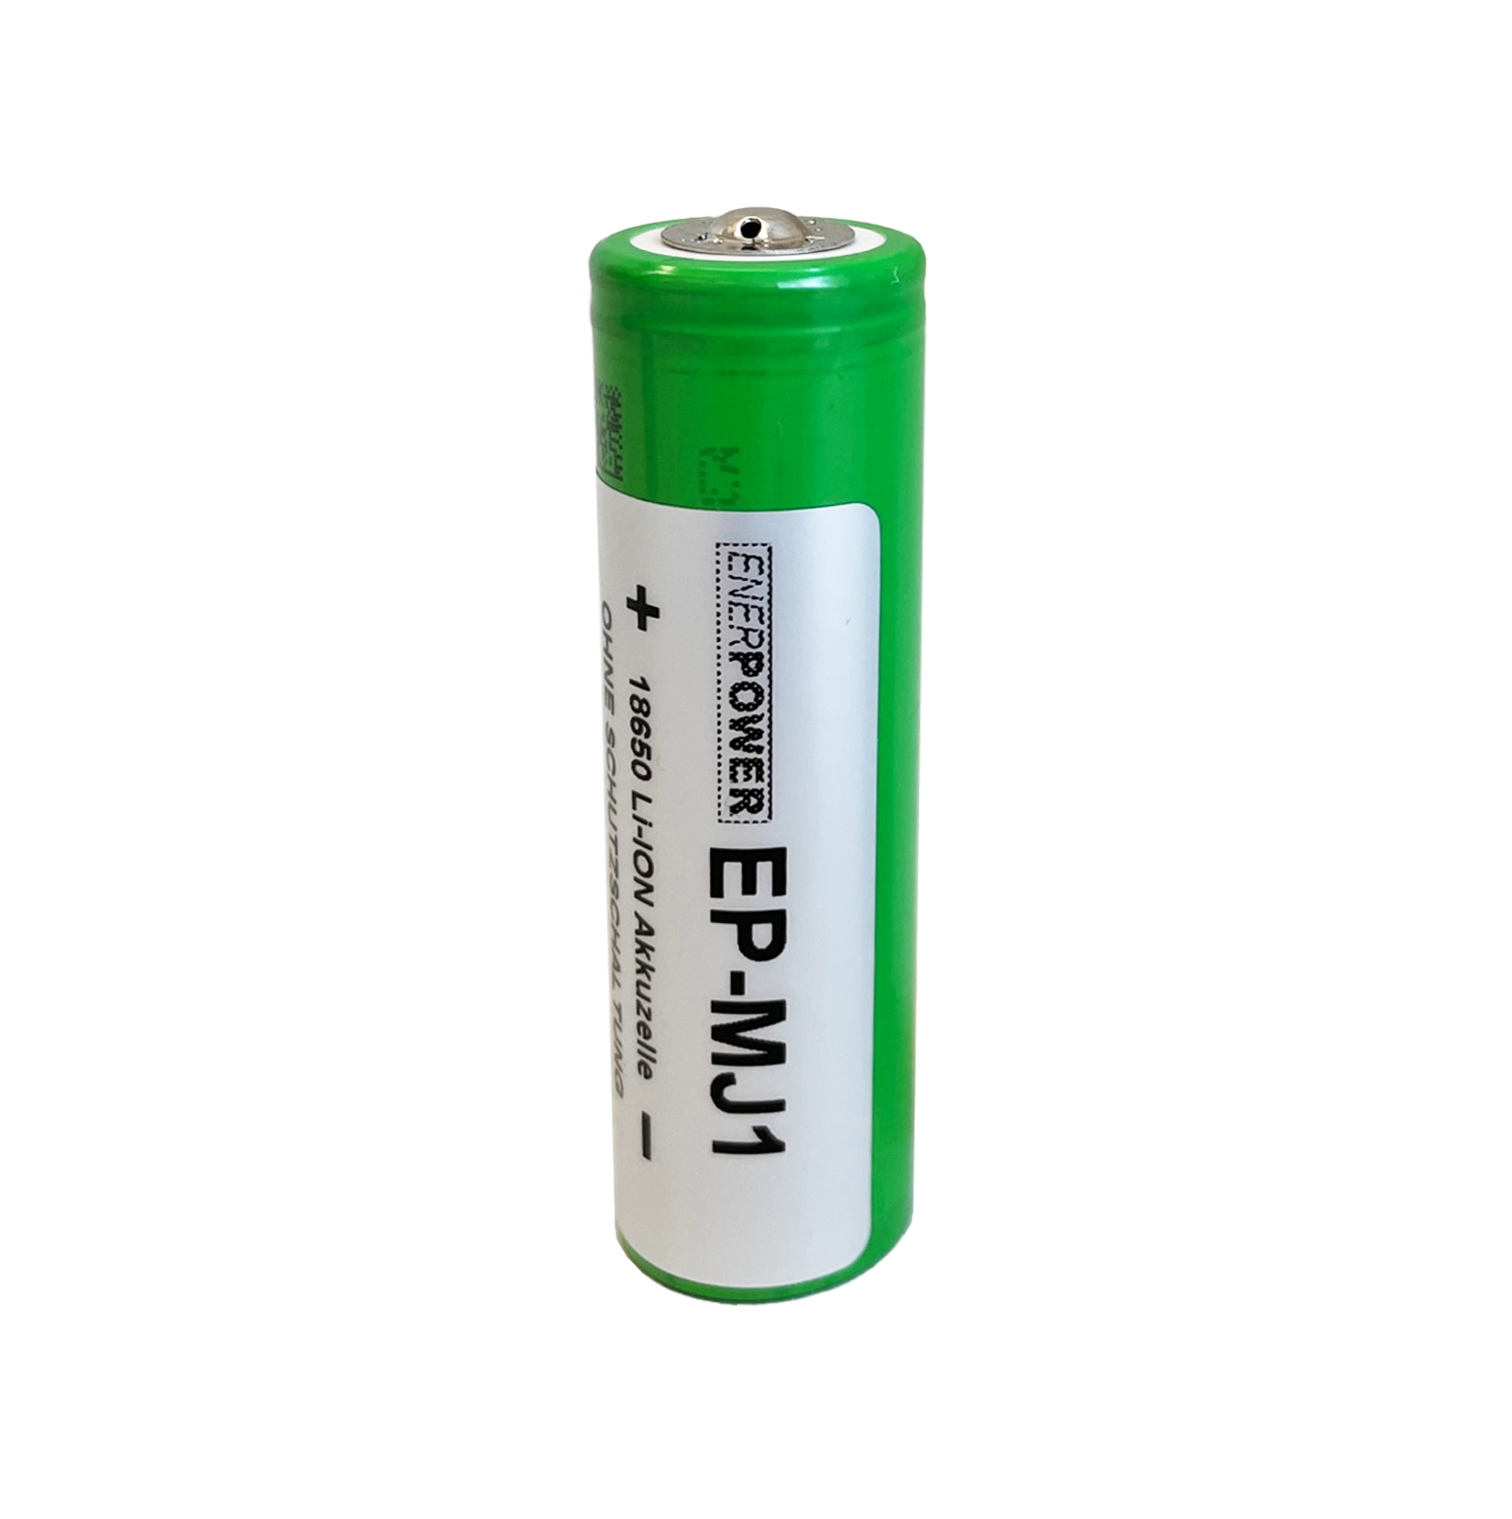  ENERpower EP-Mj1 Li-Ion Battery 3.6V 3450mAh Button-Top